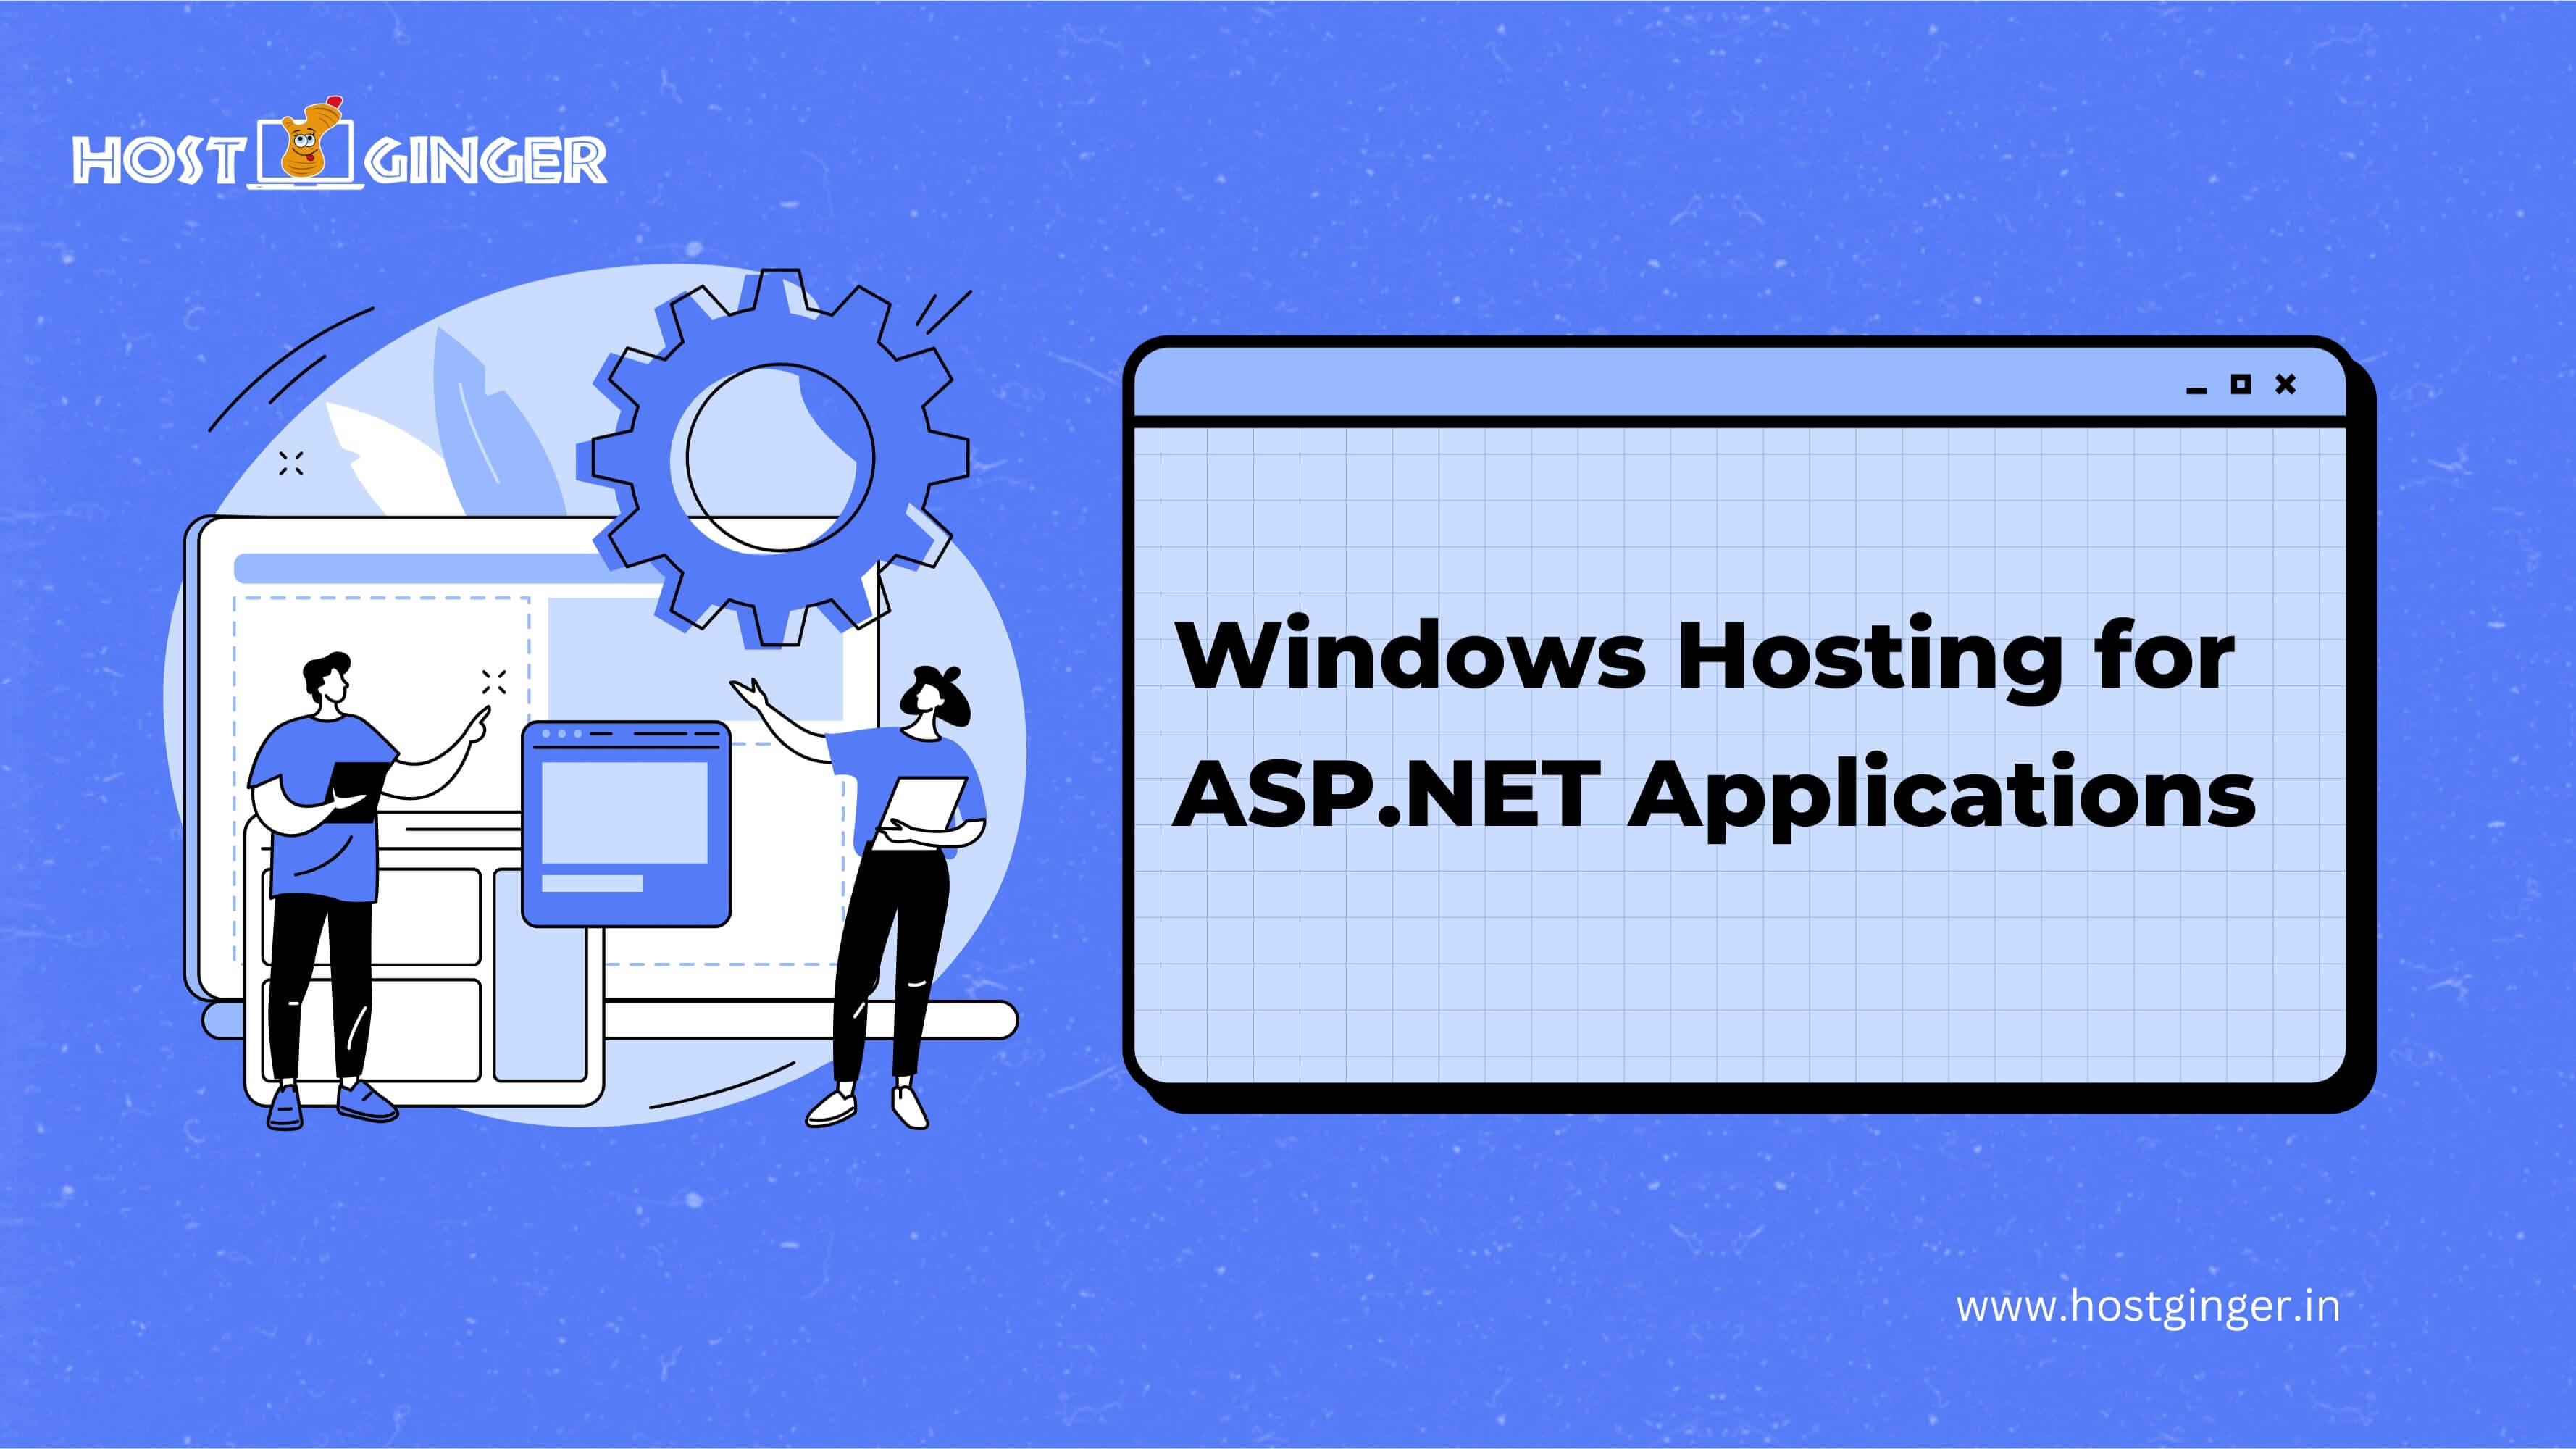 Windows Hosting for ASP.NET Applications